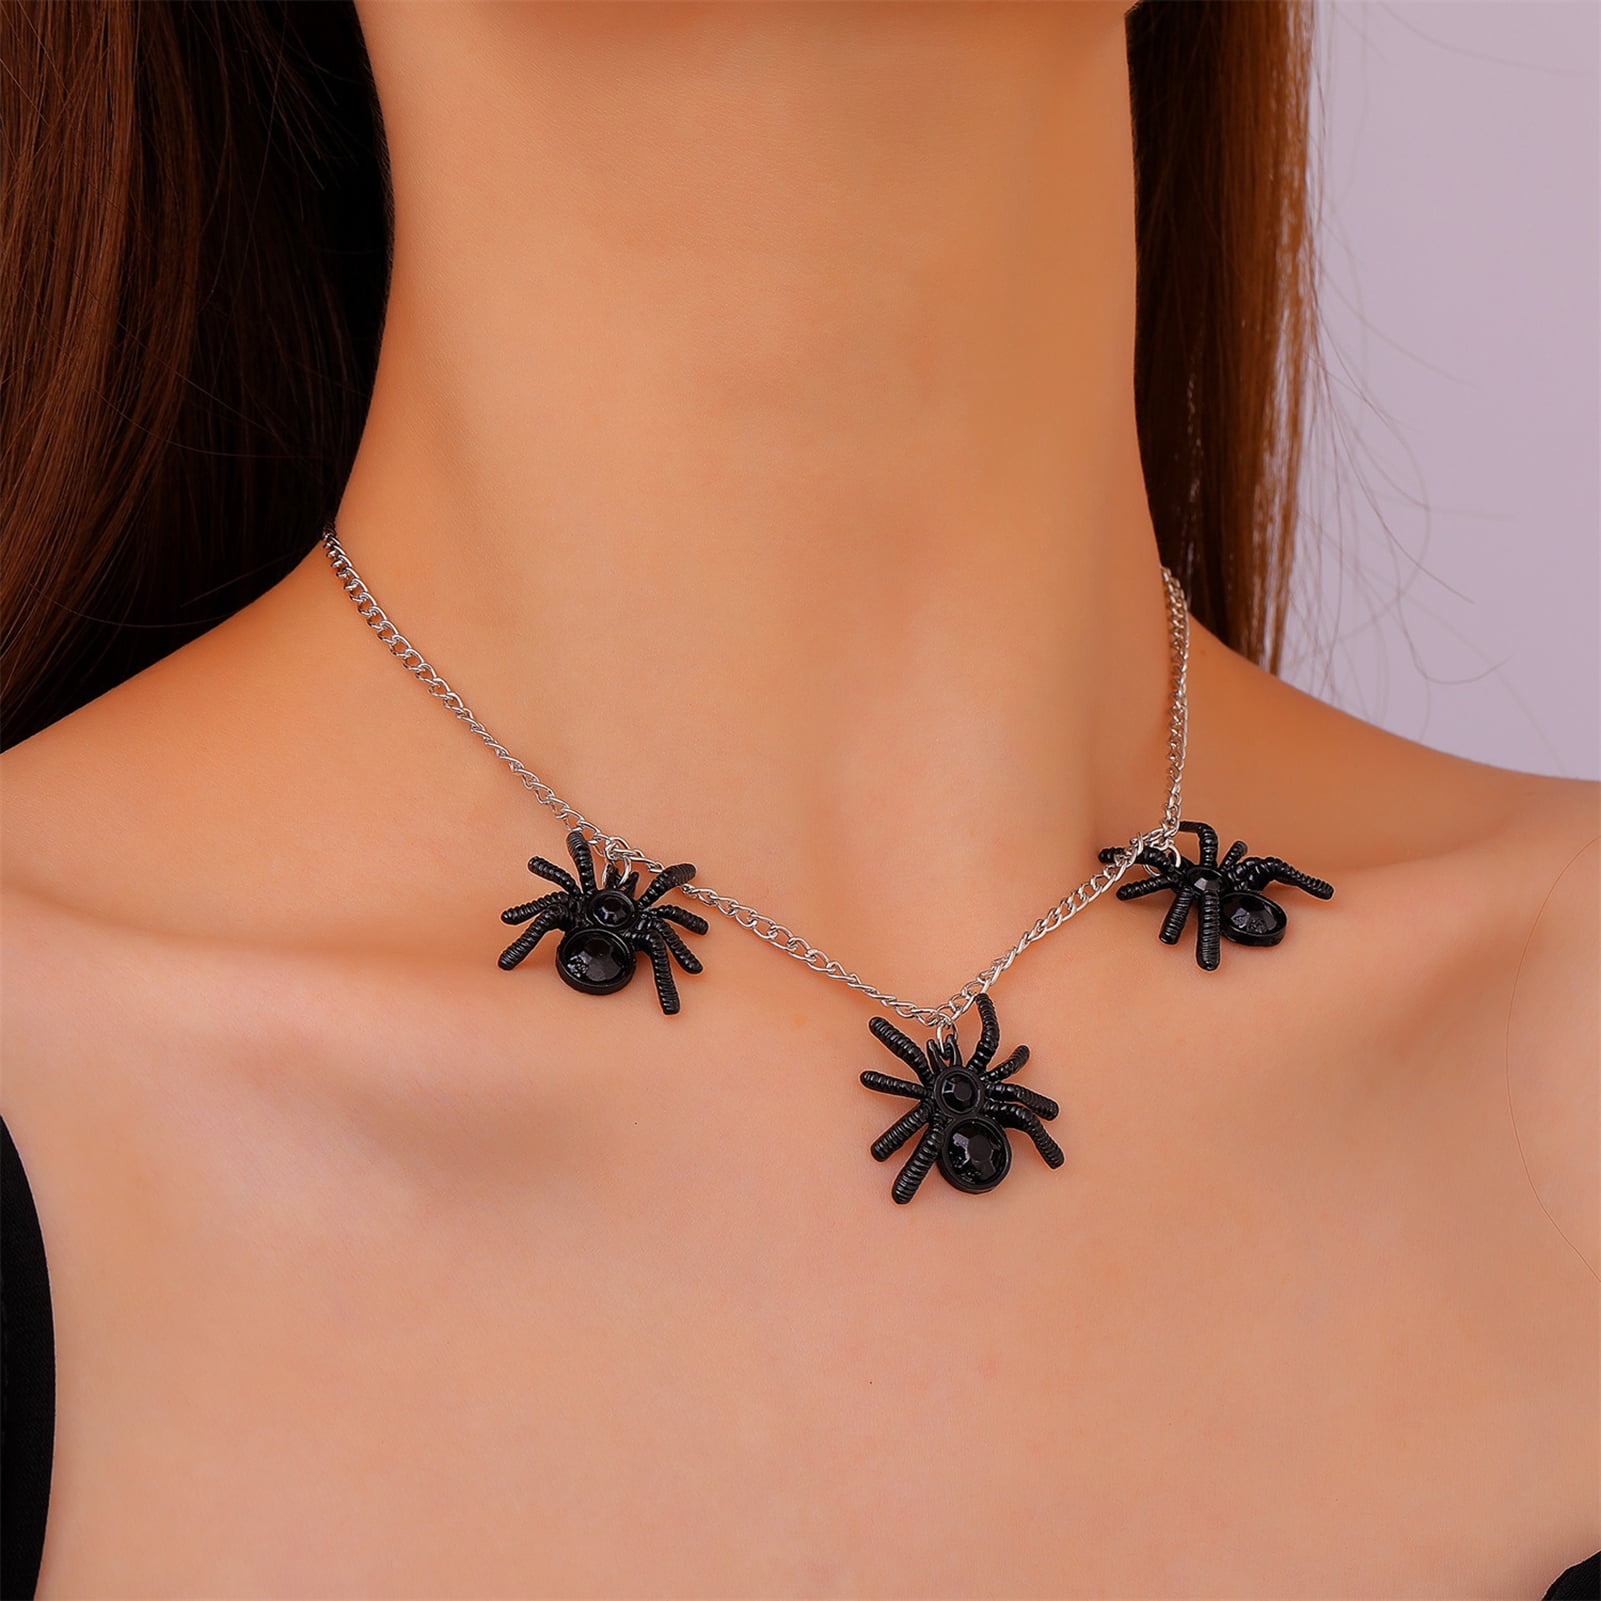 Halloween Pendants, Spider Pendants, Pendant Jewelry